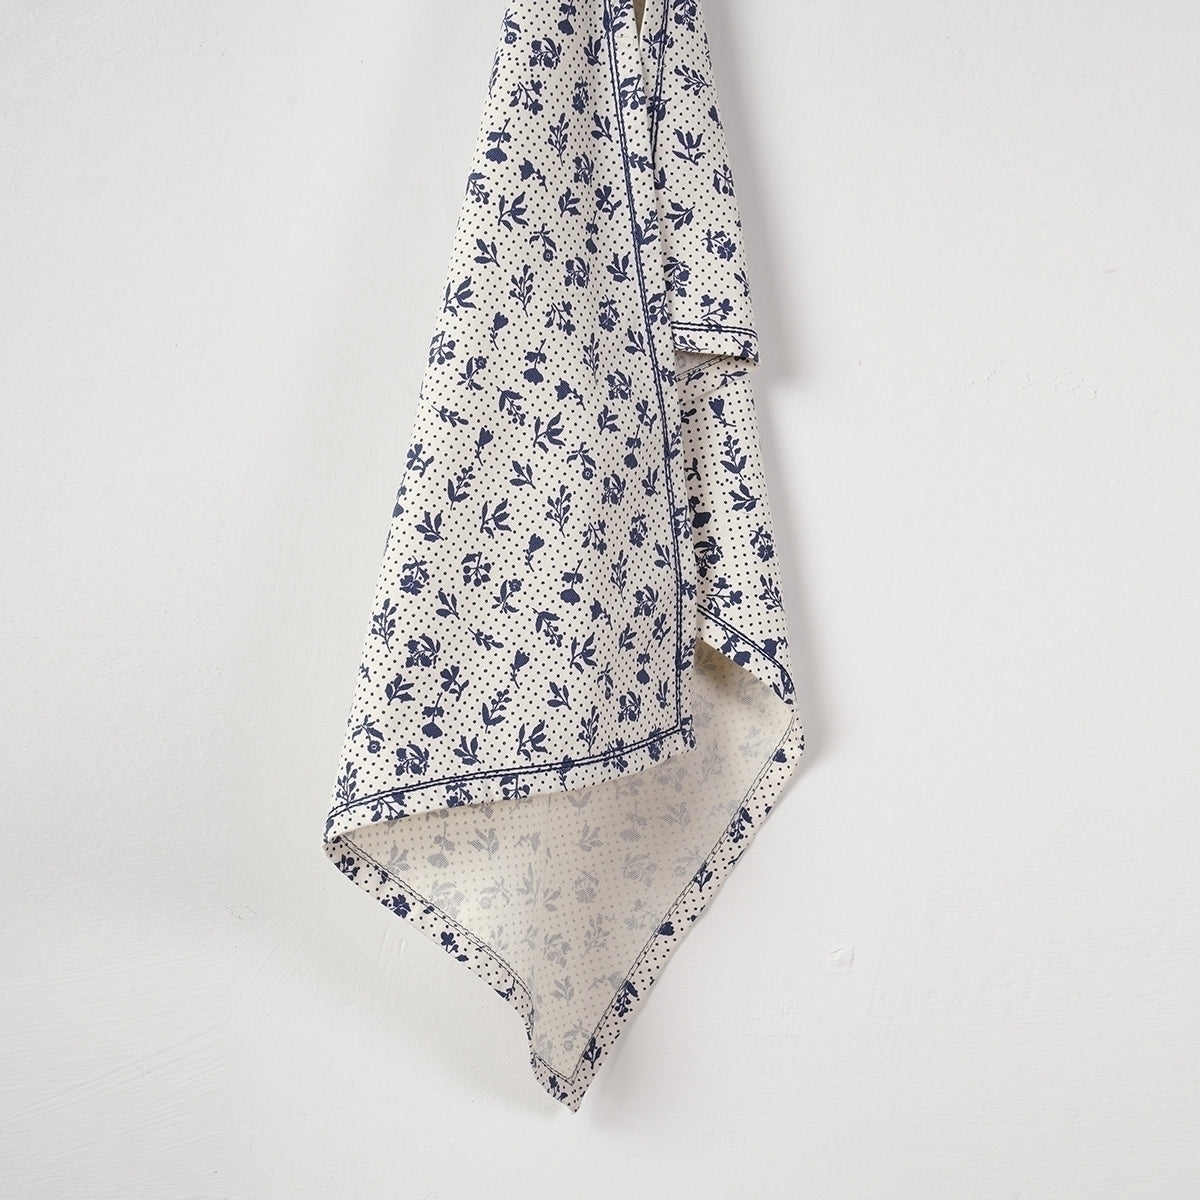 Indigo blue Printed Kitchen Towel, small floral pattern, 100% cotton, size 20"X28"